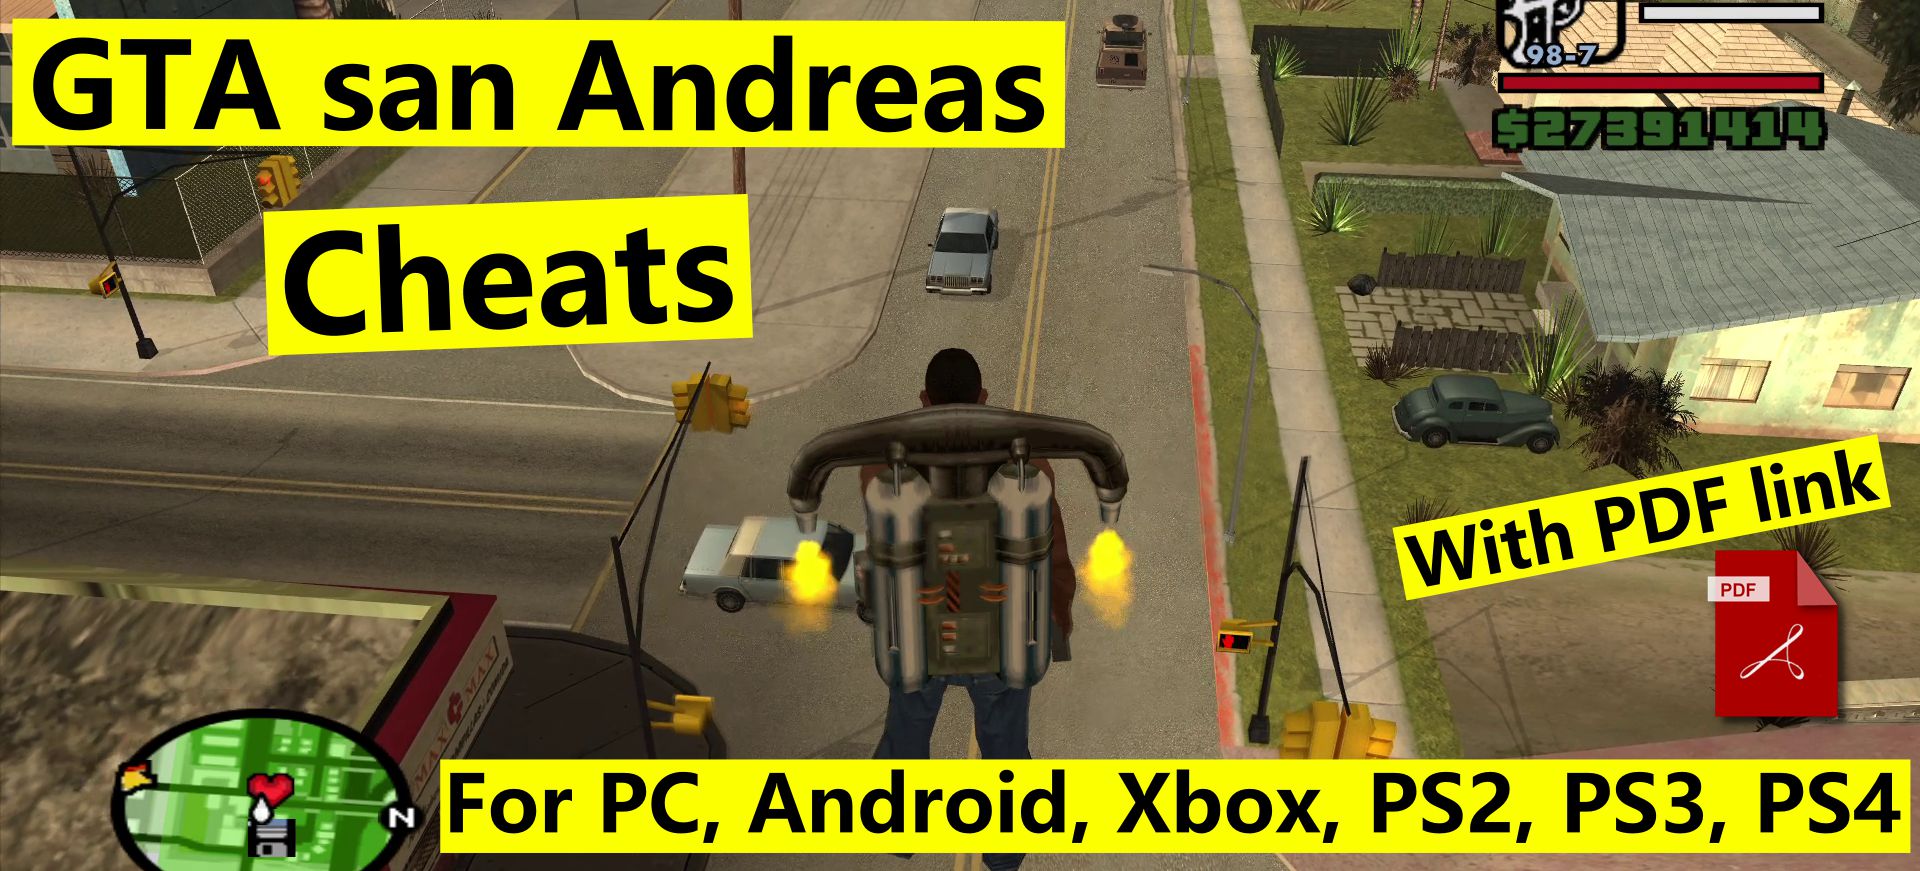 Wissen Handvol Maak avondeten GTA San Andreas cheats – For PC, Android, Xbox, PS2, PS3, PS4